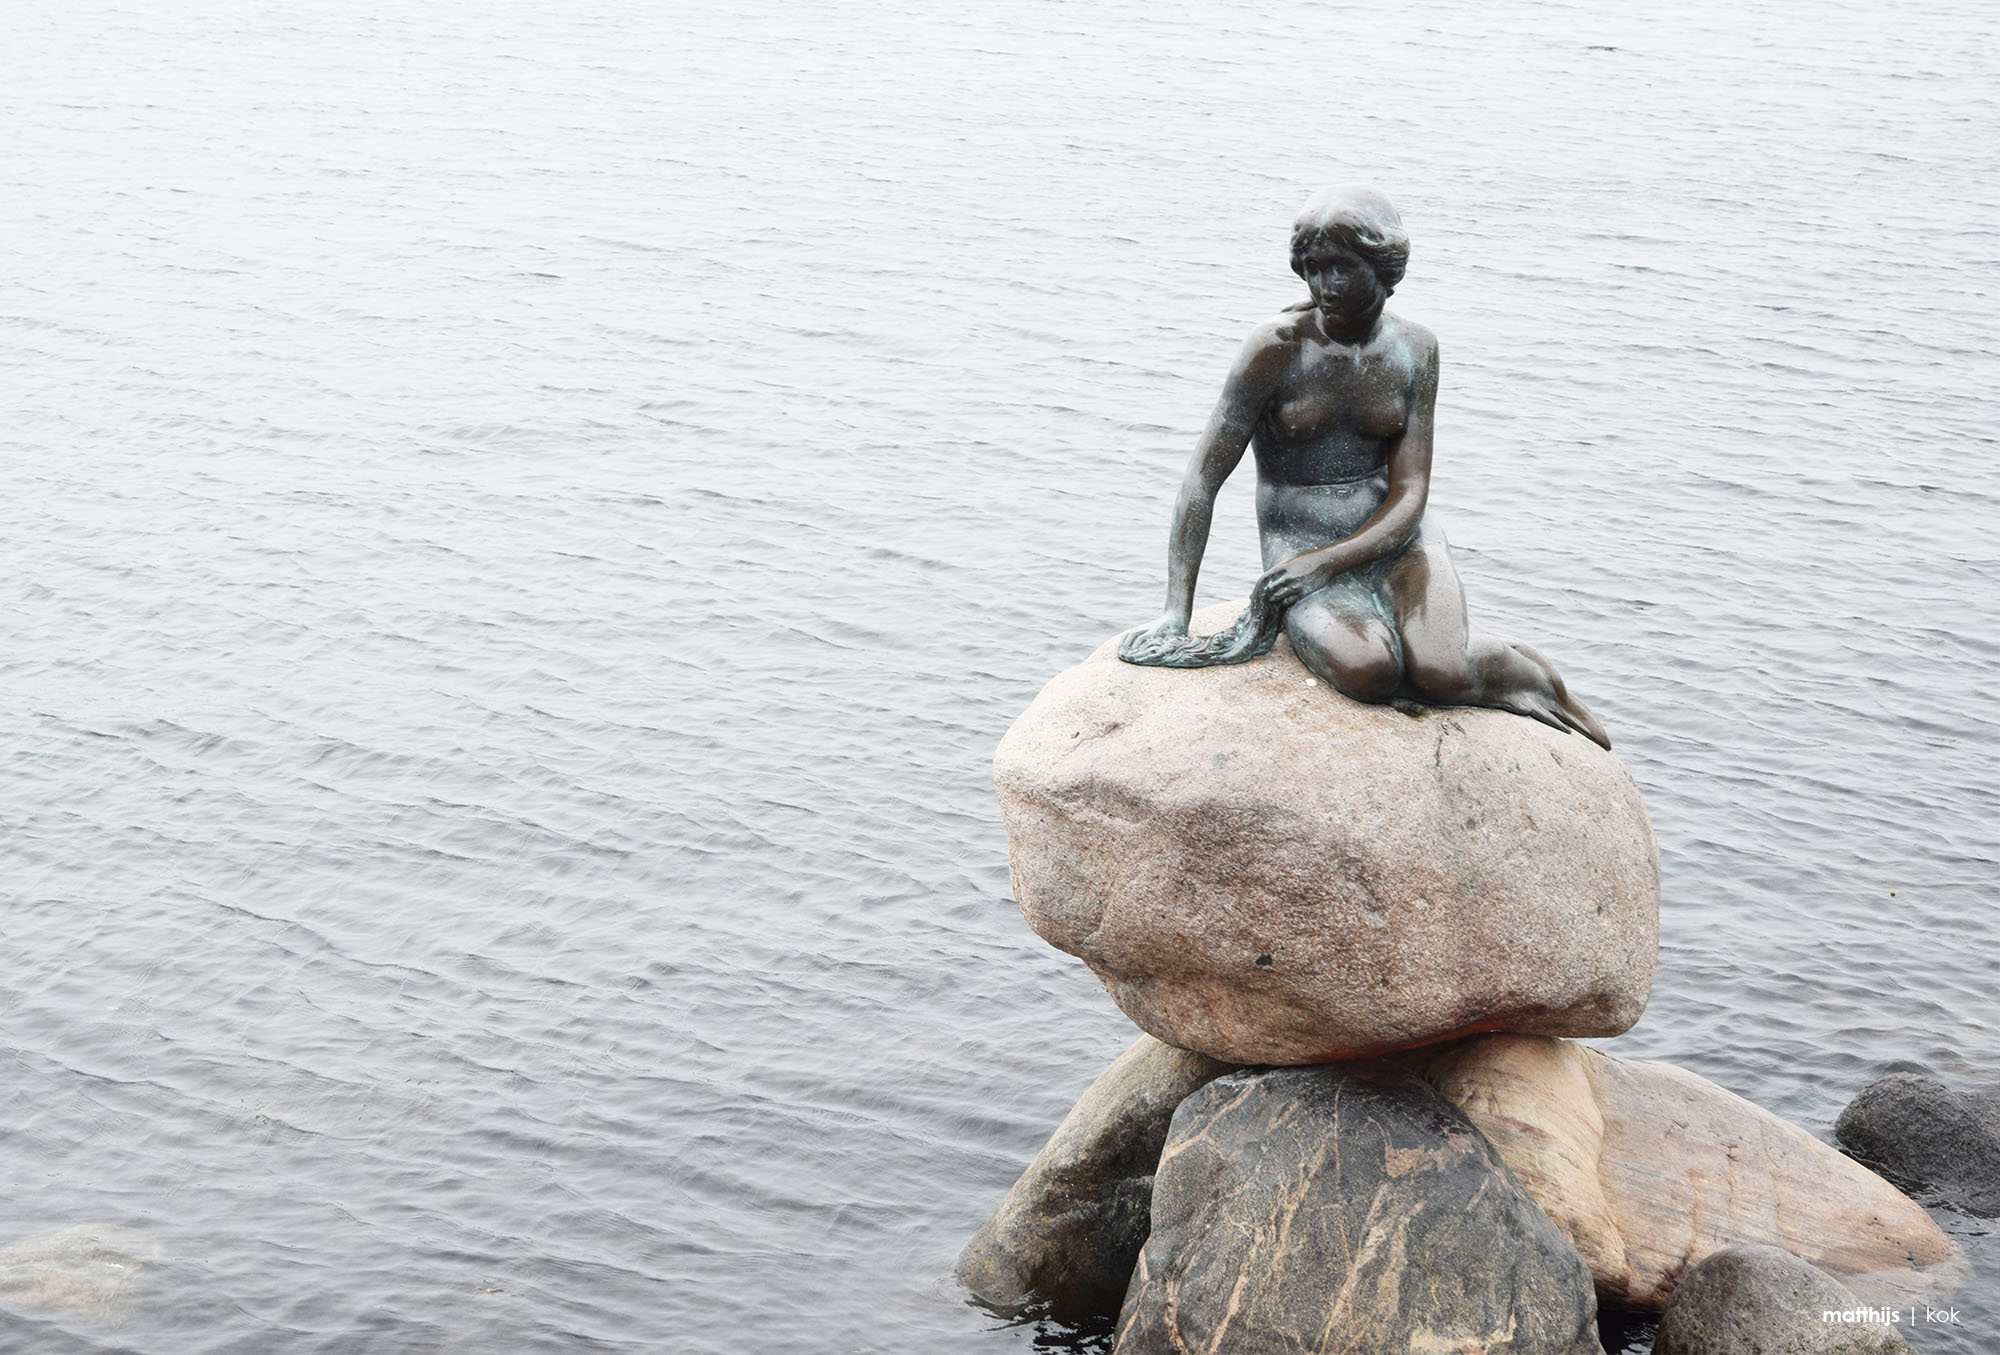 The Little Mermaid Statue, Copenhagen | Photo by Matthijs Kok